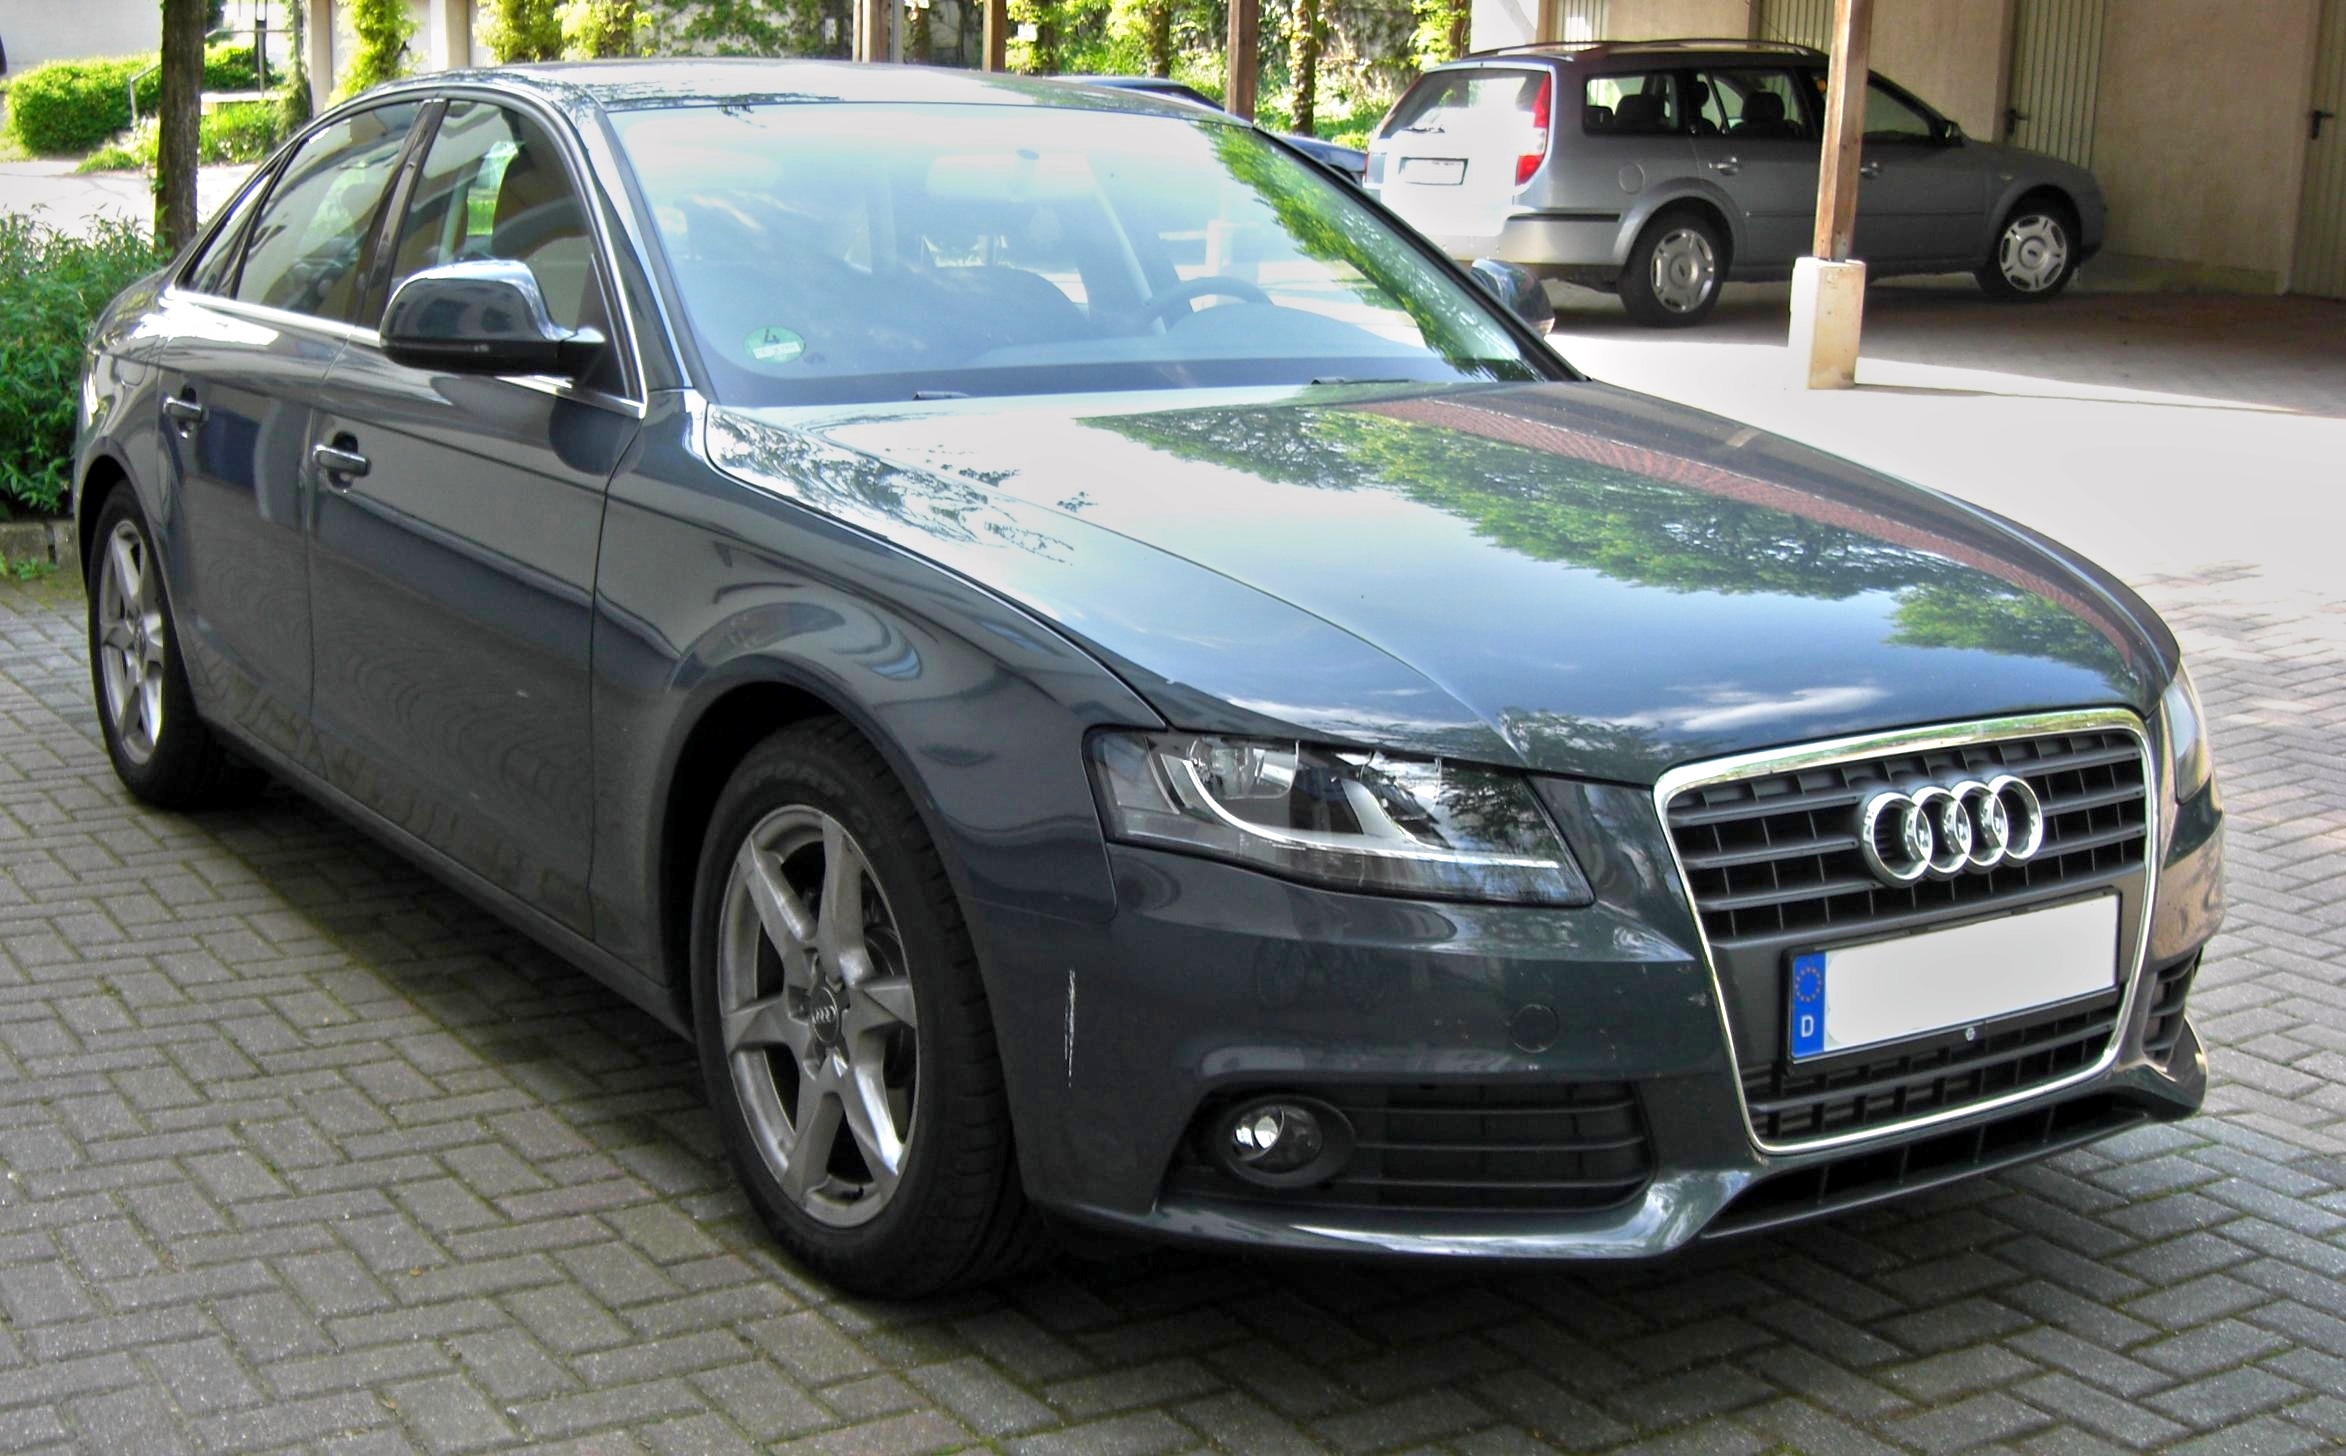 File:Audi A4 B8 front 20080414.jpg - Wikimedia Commons